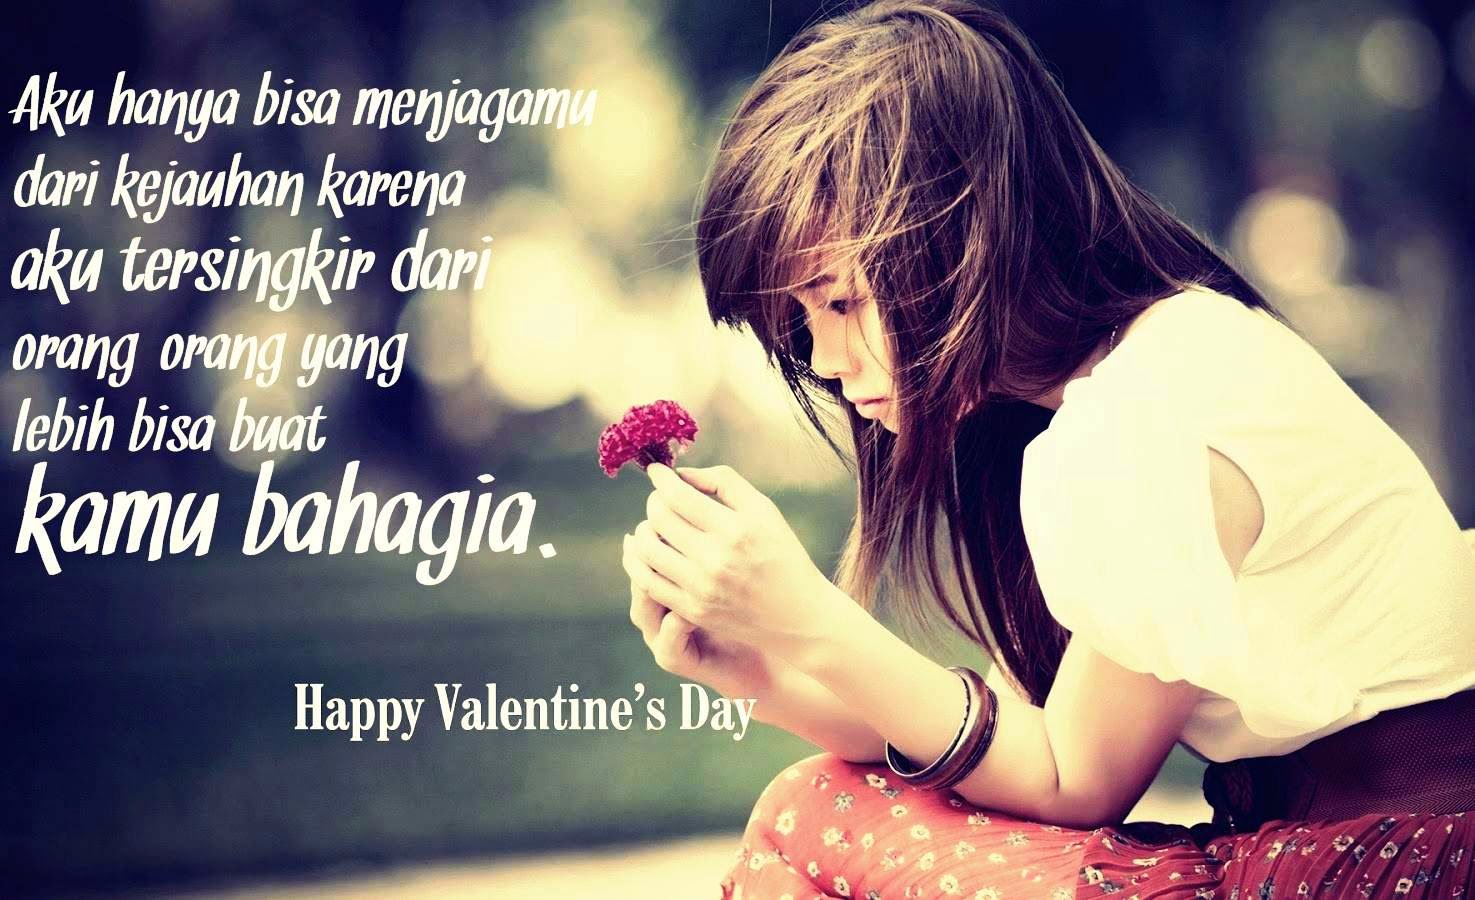 Wallpaper Kata Kata Sedih Happy Valentine Day Girls 387236